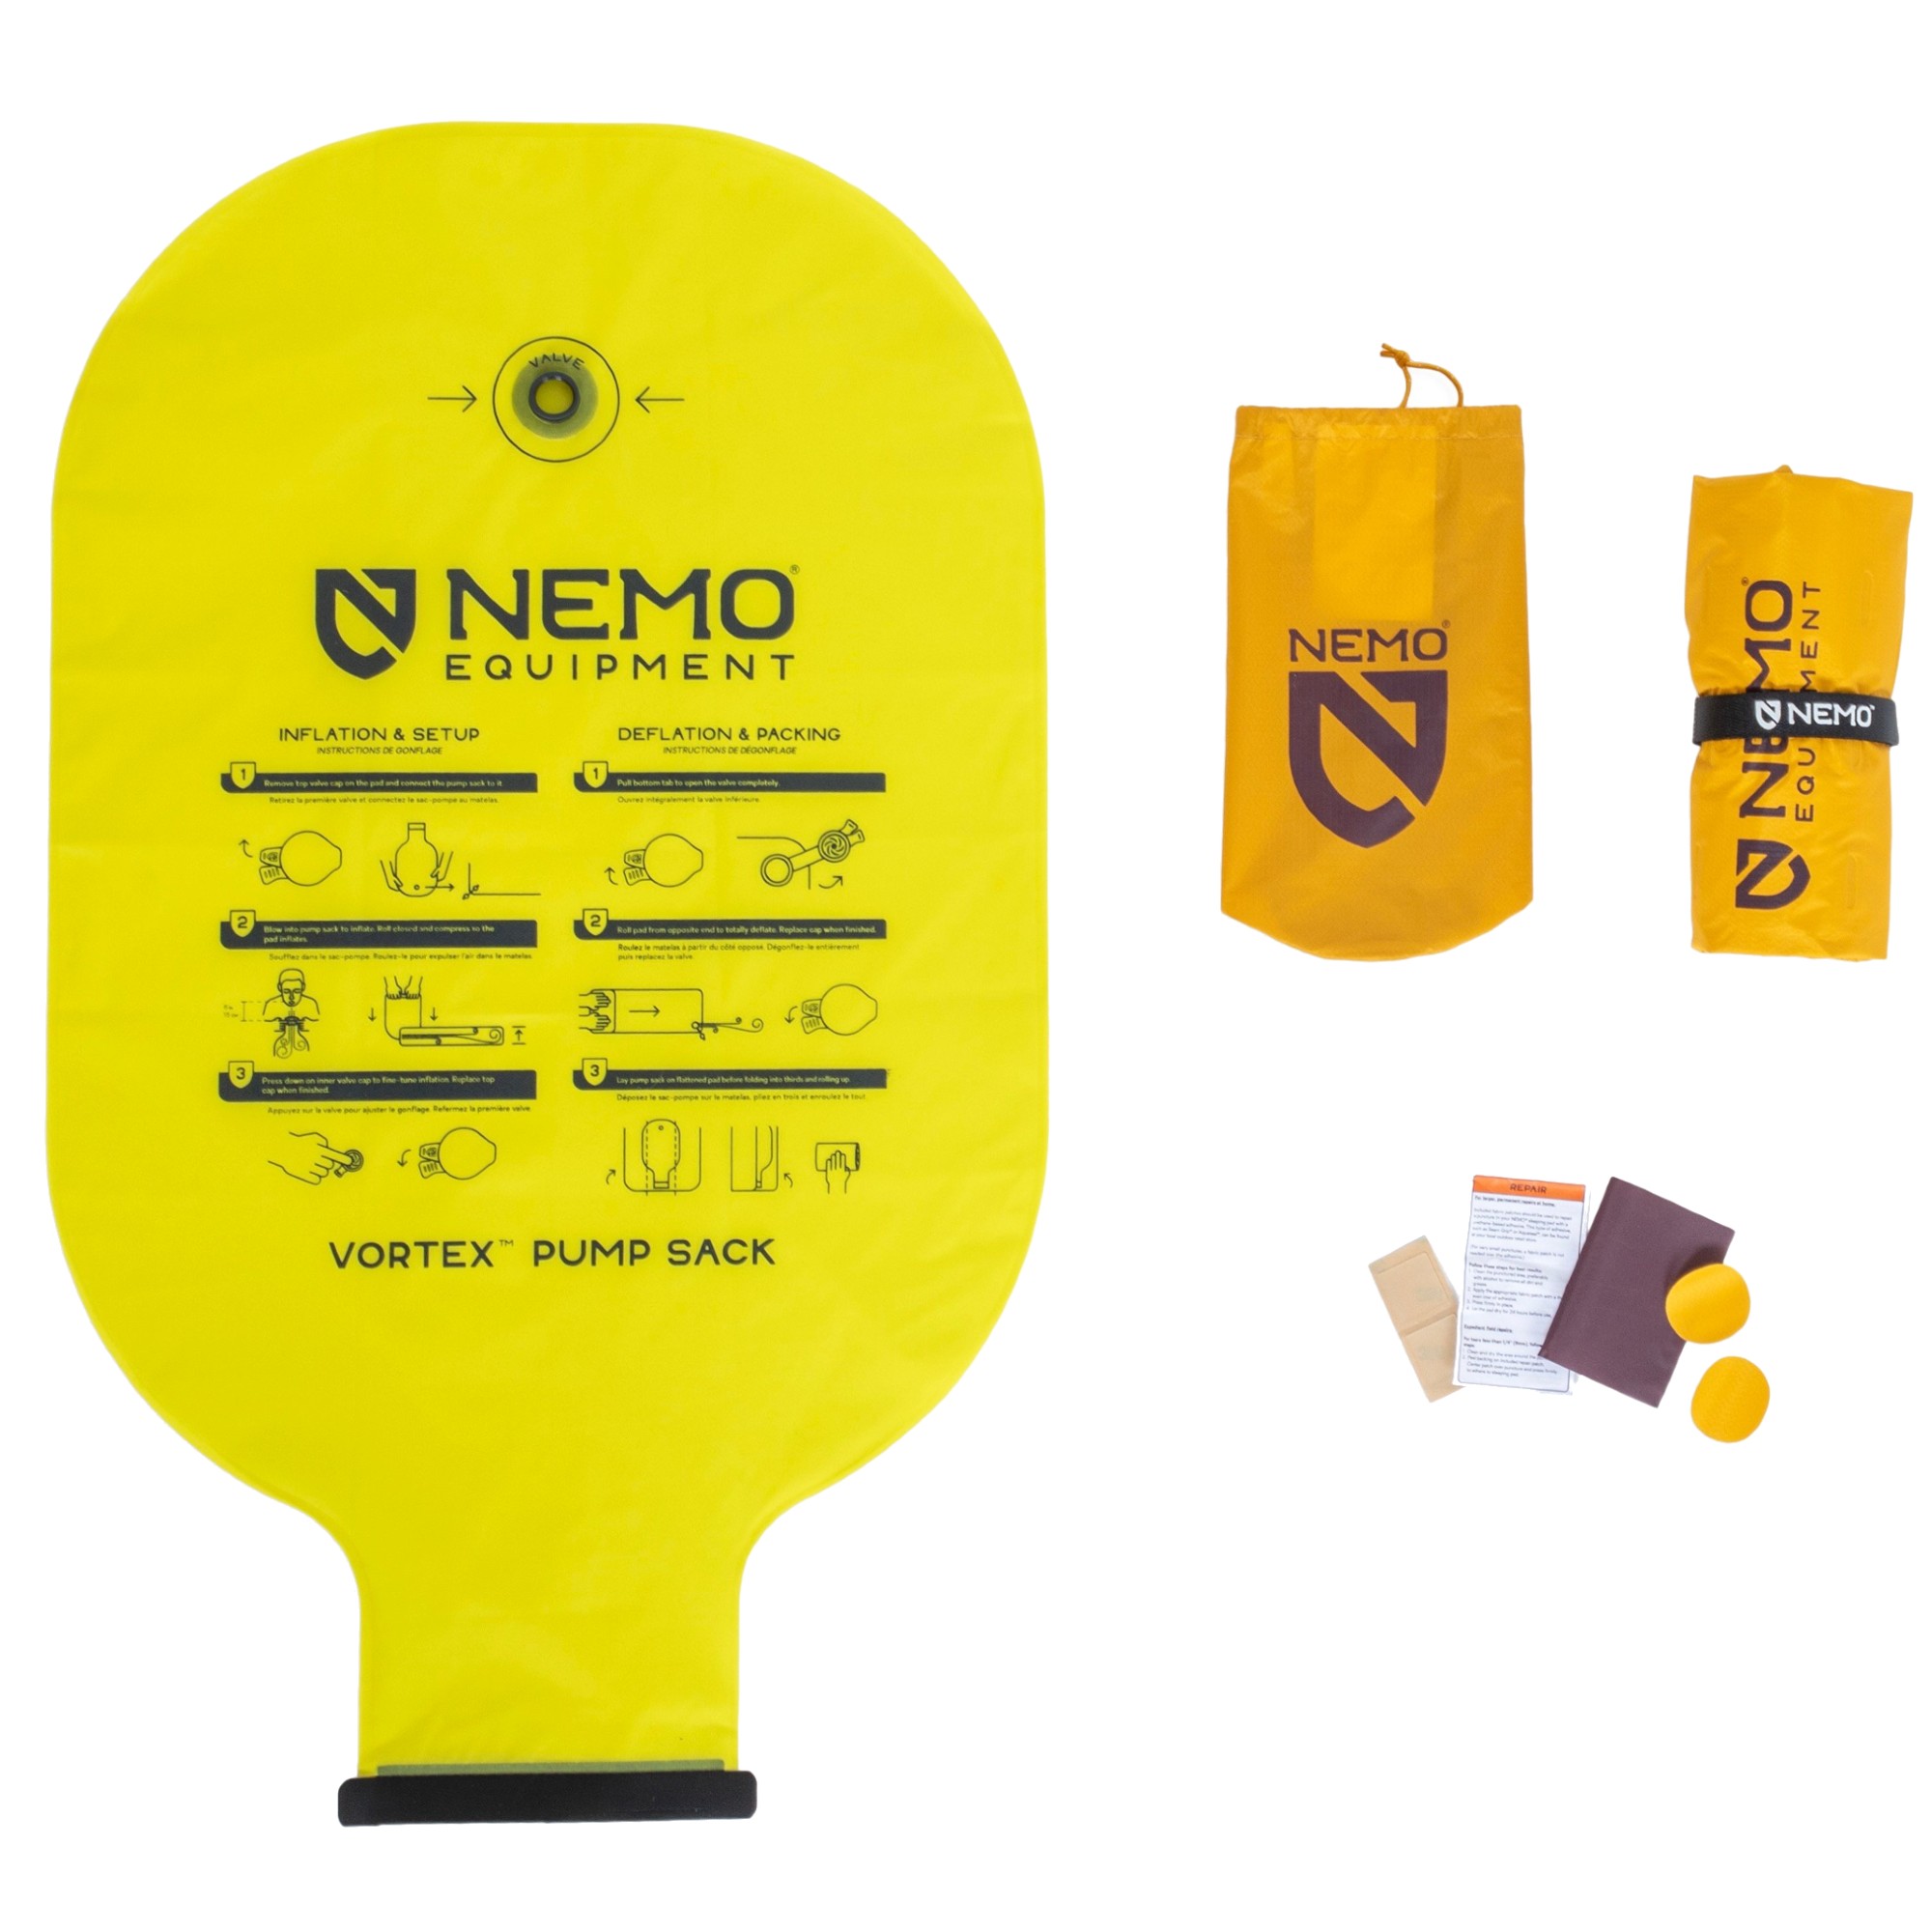 Nemo Tensor Trail Ultralight Sleeping Mat